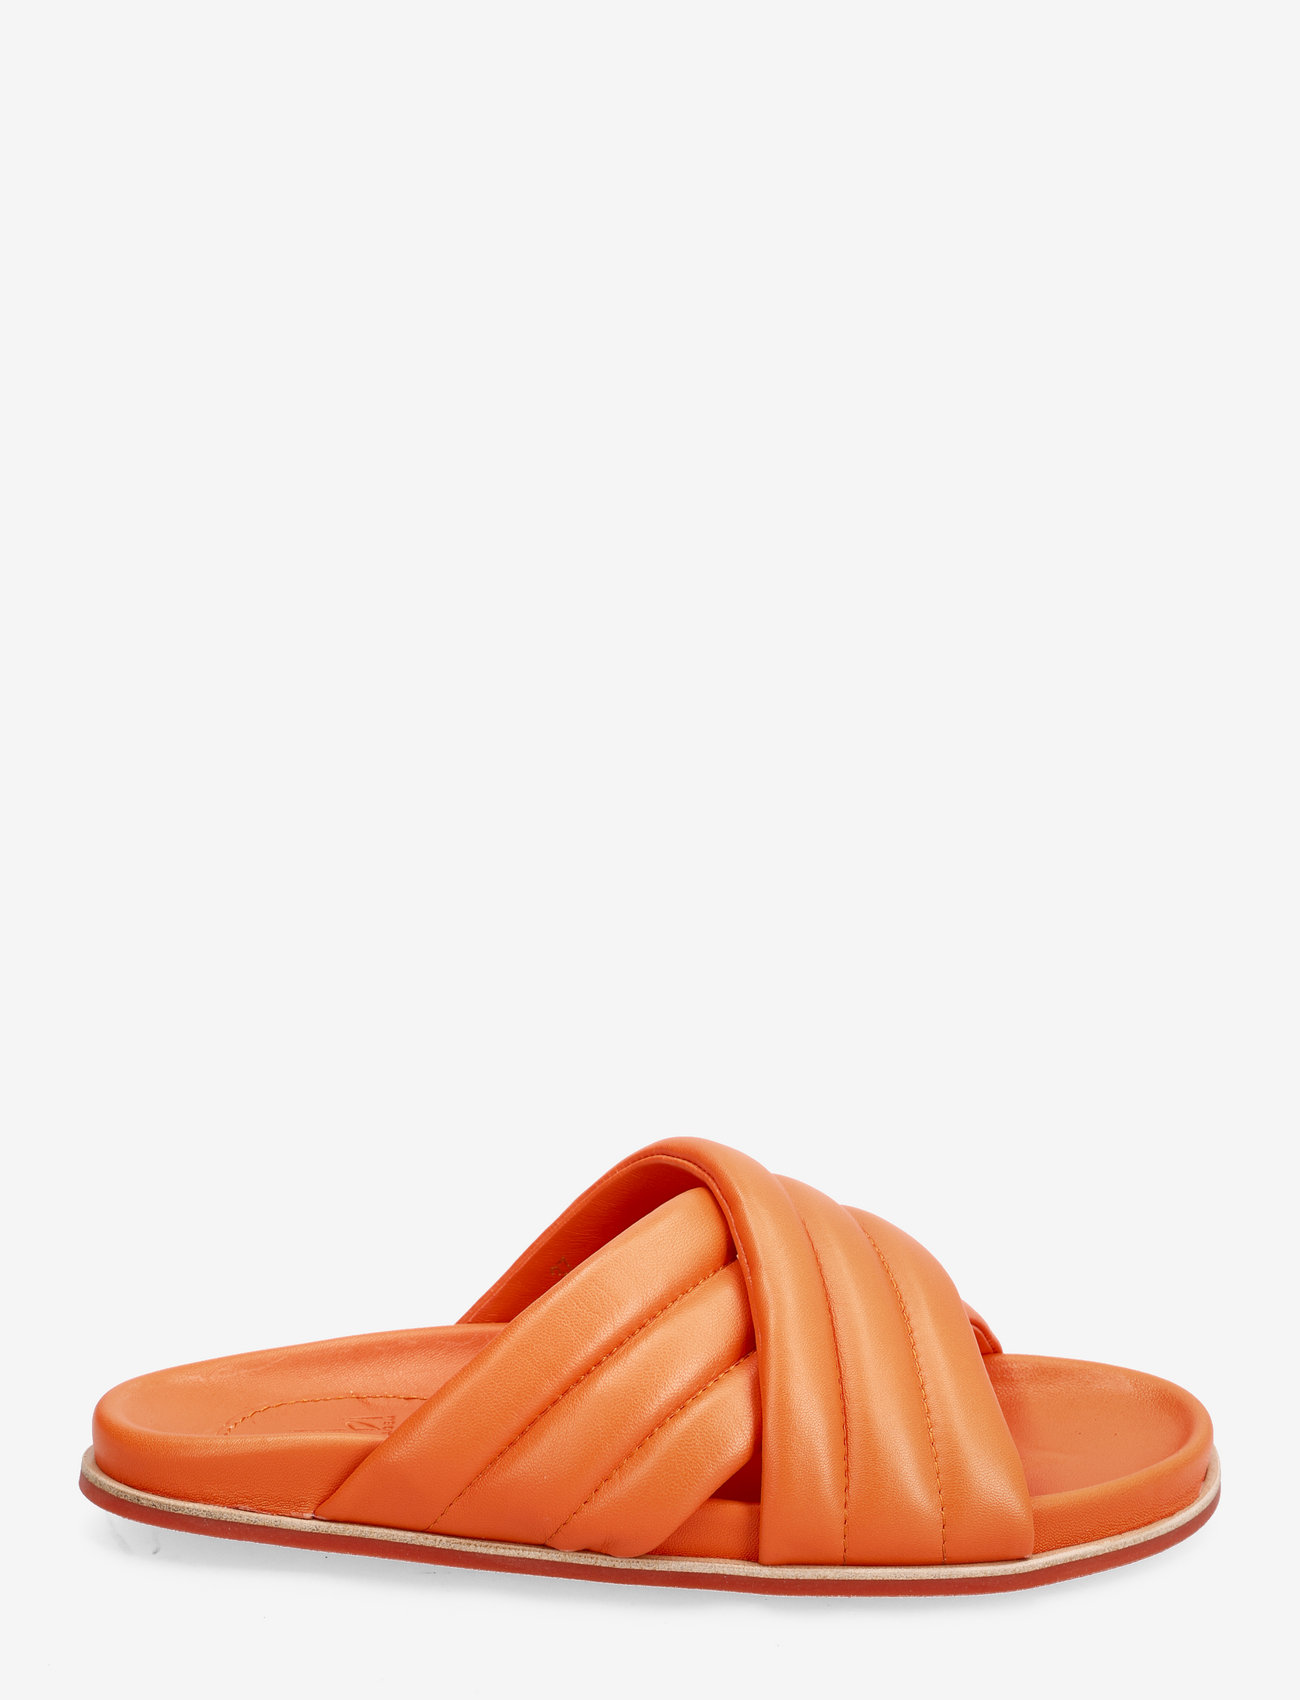 Billi Bi - C5573 - platta sandaler - orange nappa - 1